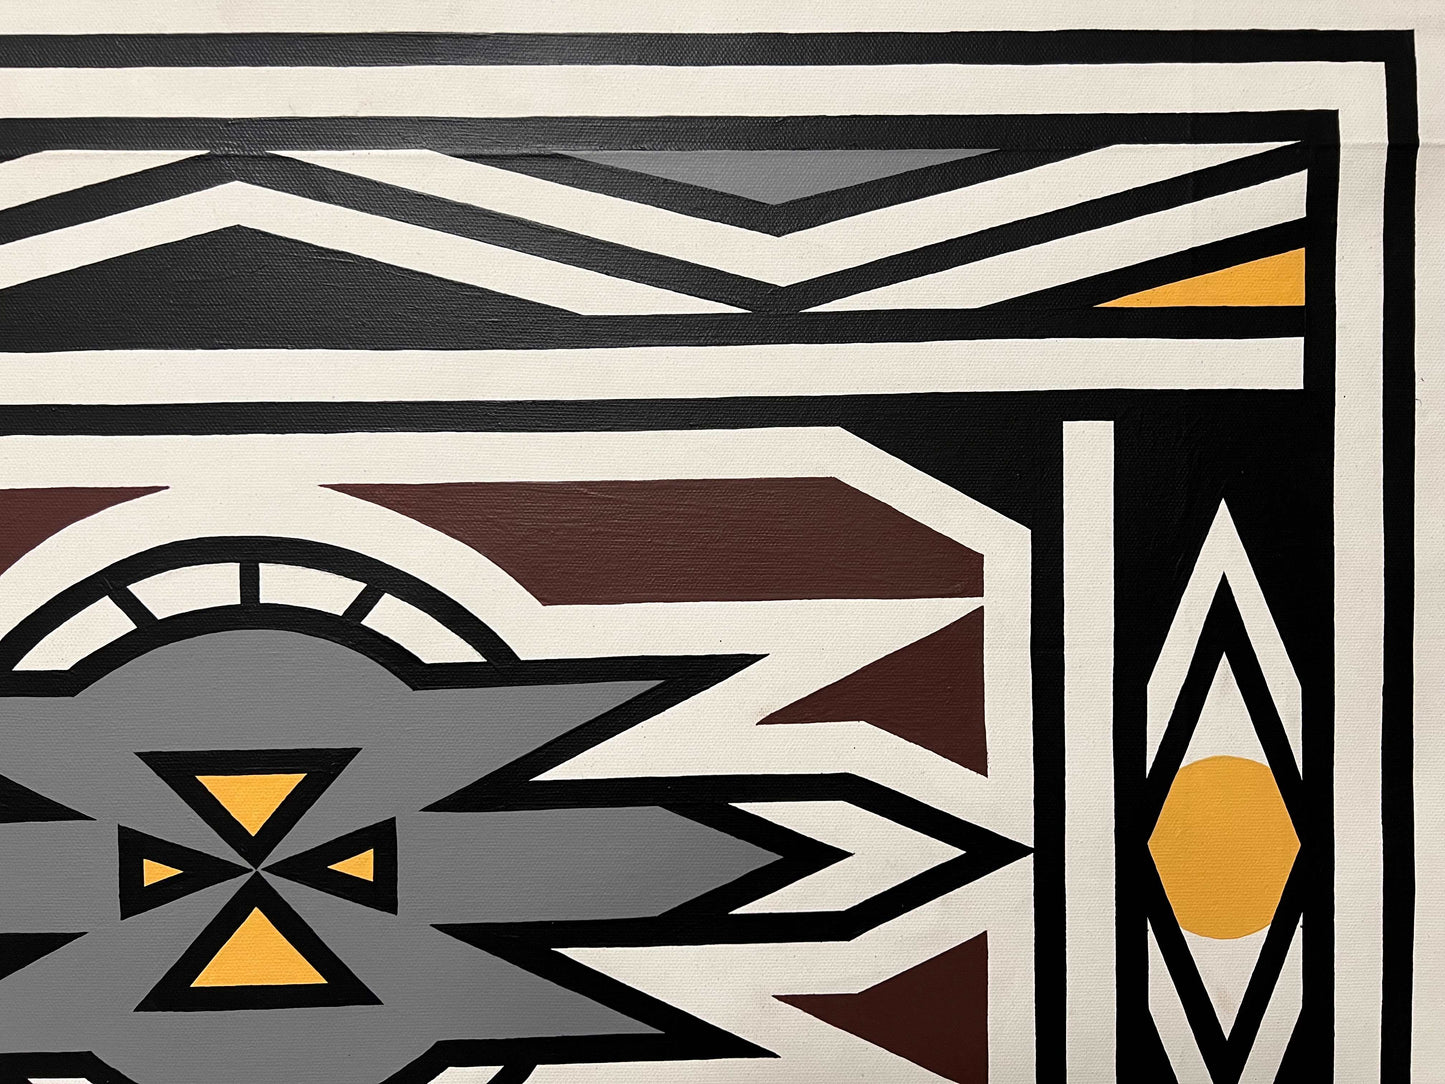 Esther Mahlangu (b. 1935, South Africa) | Ndebele Pattern, 2014 | Acrylic on canvas, 62 x 87